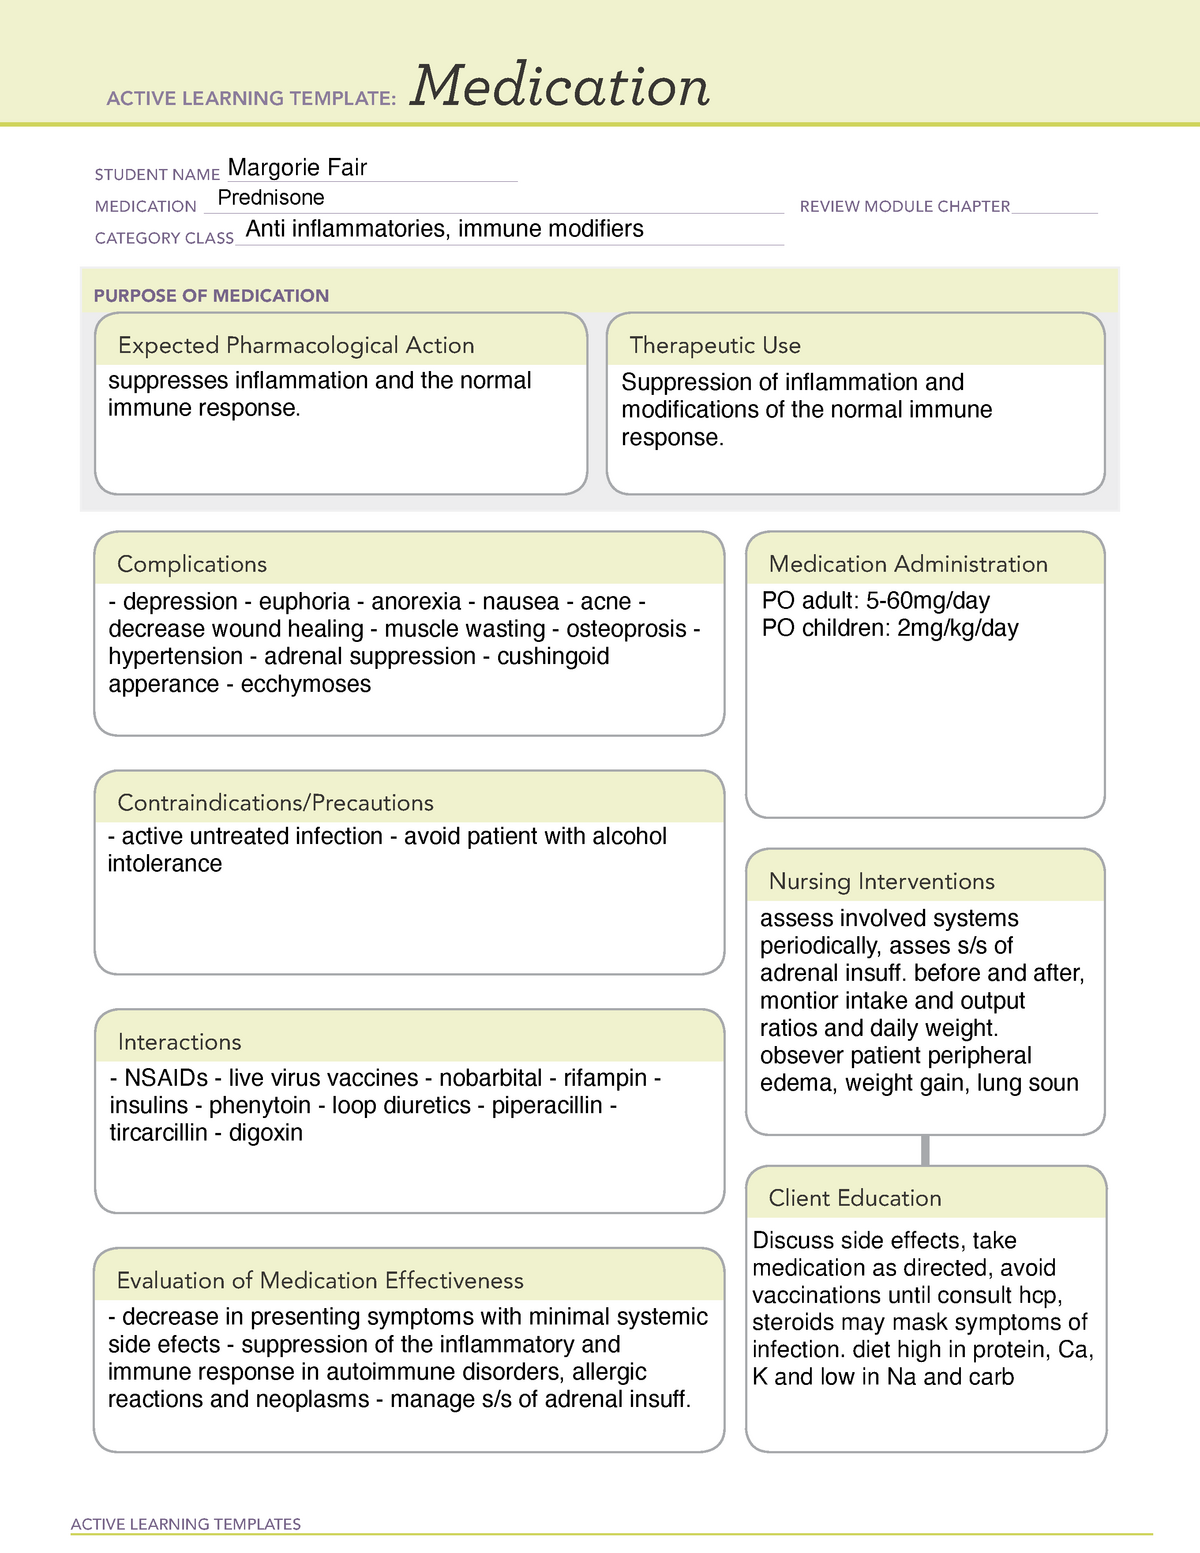 prednisone-medication-active-learning-templates-medication-student